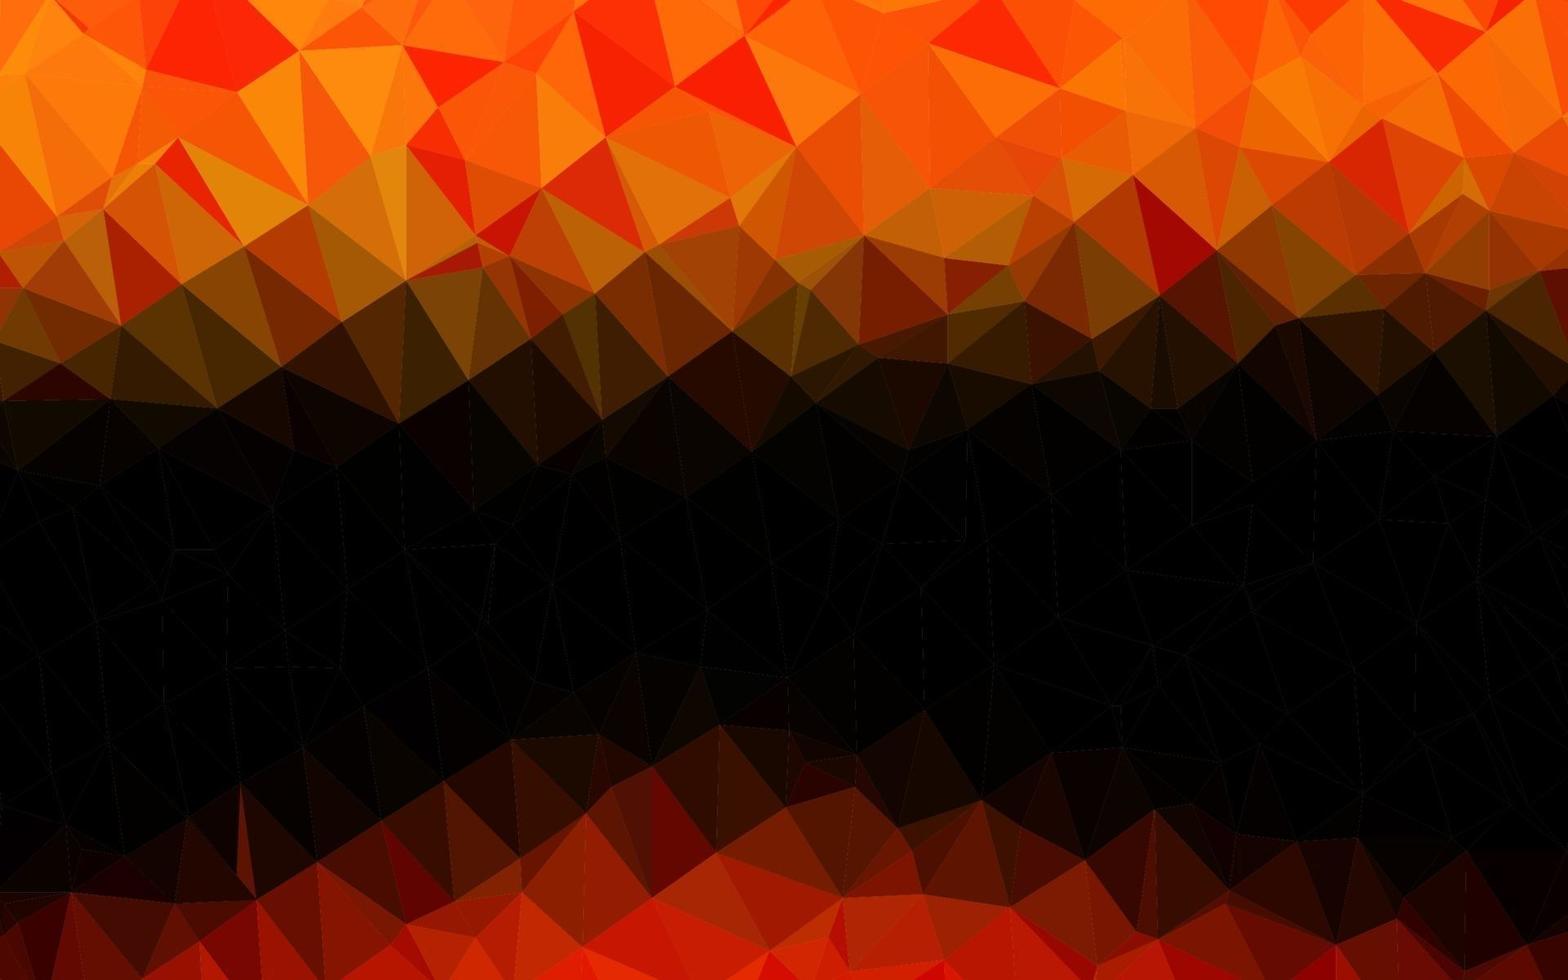 textura poligonal do sumário do vetor laranja claro.